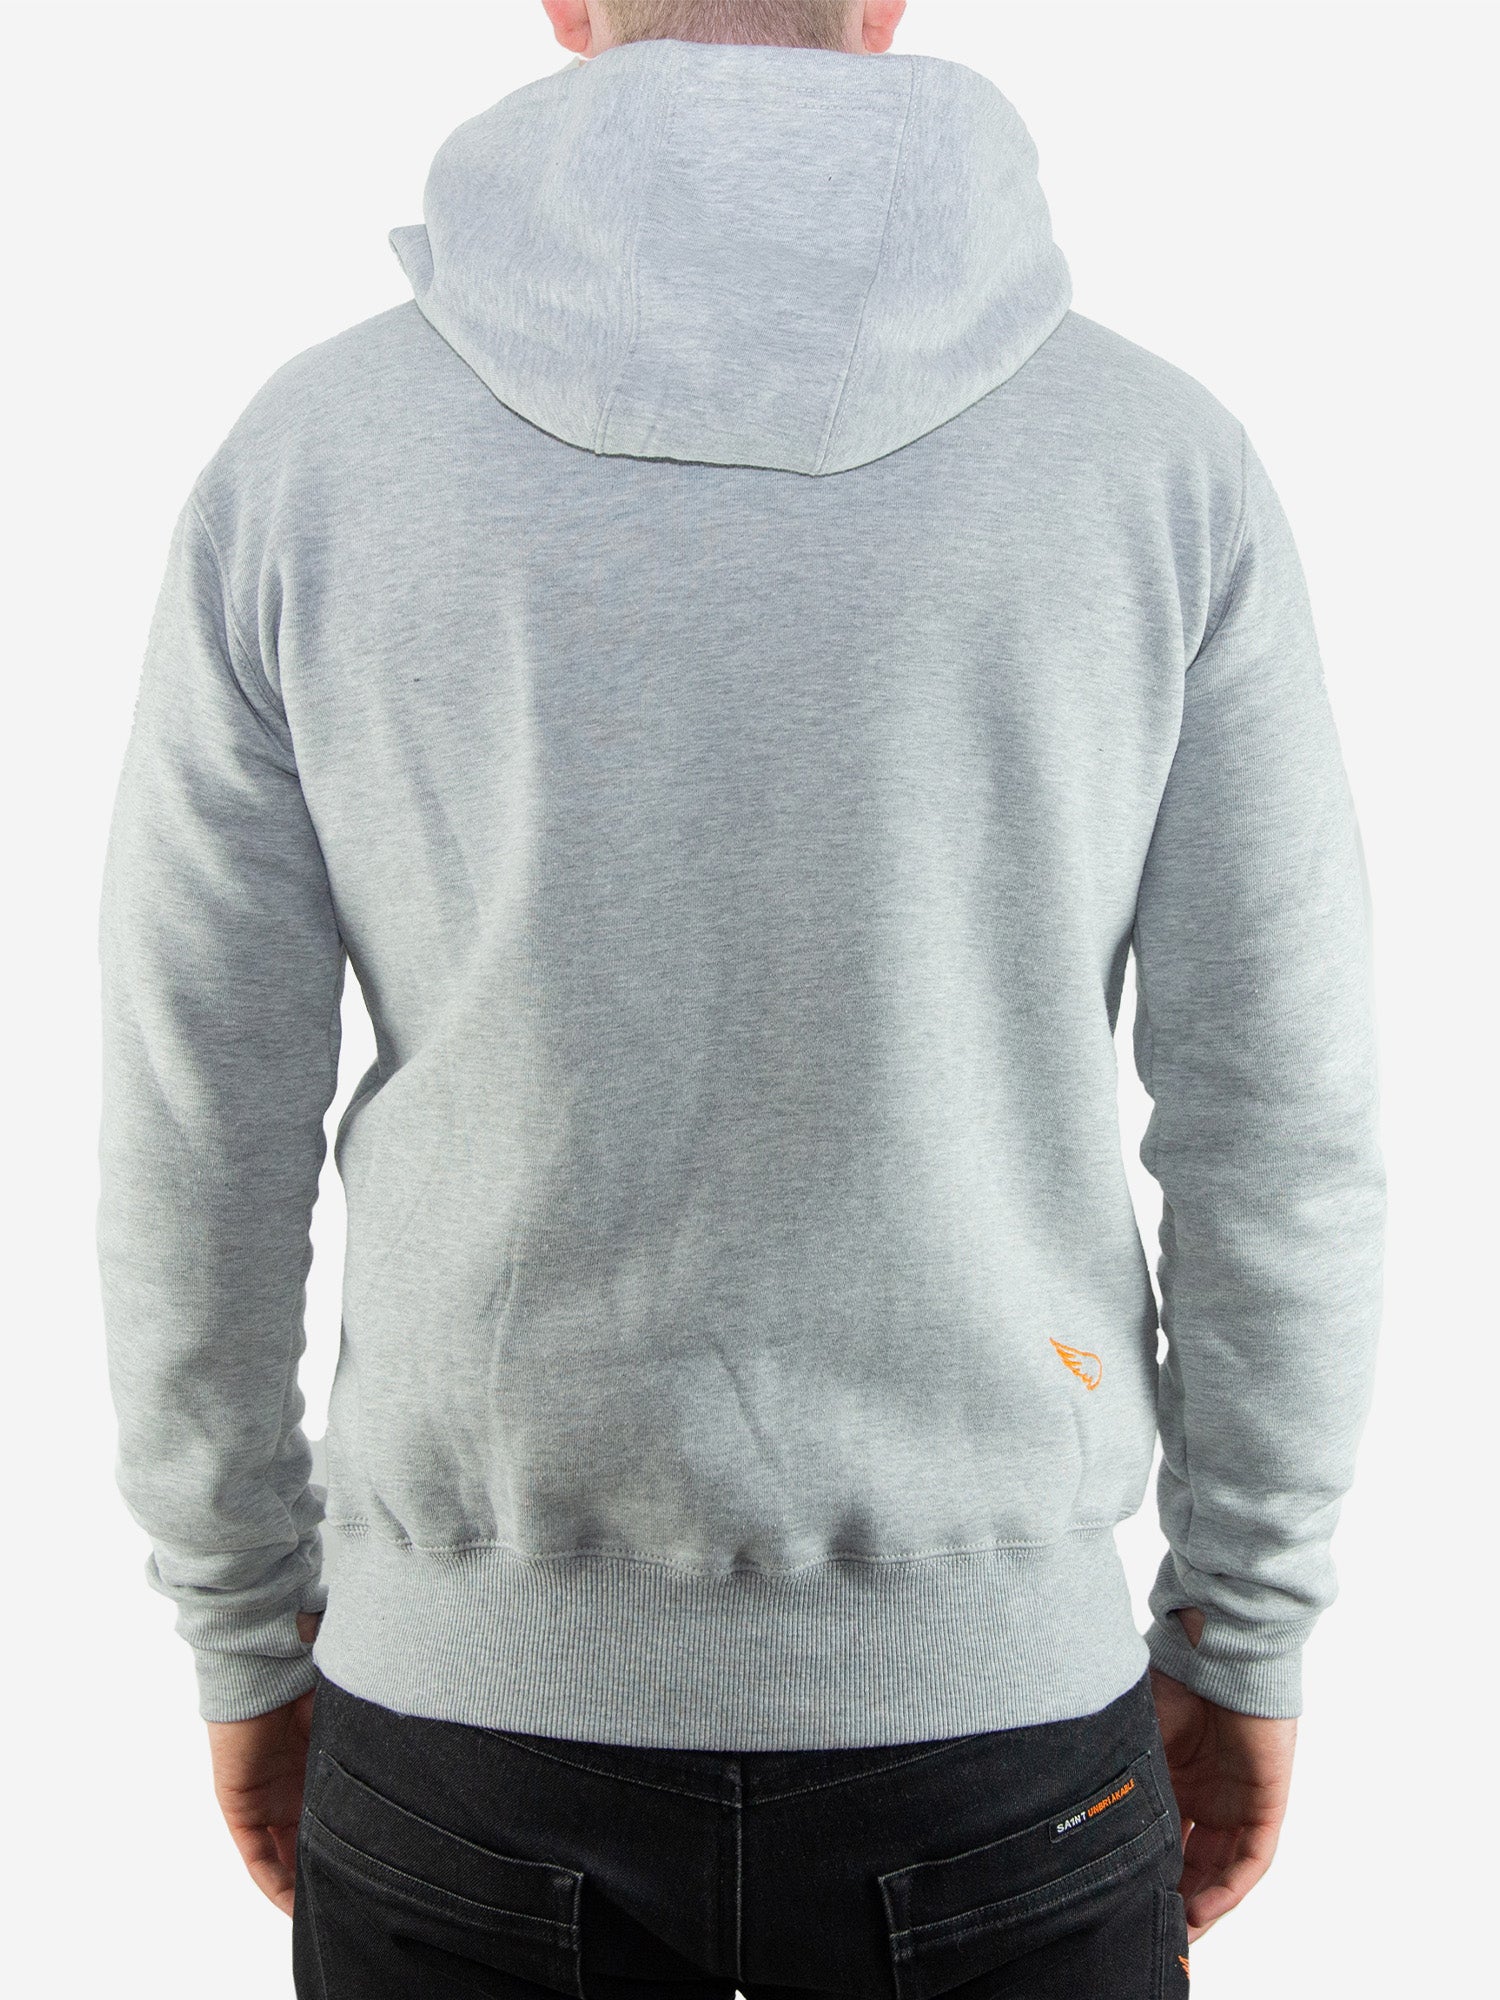 SA1NT Embossed No. 1 Pullover hoodie